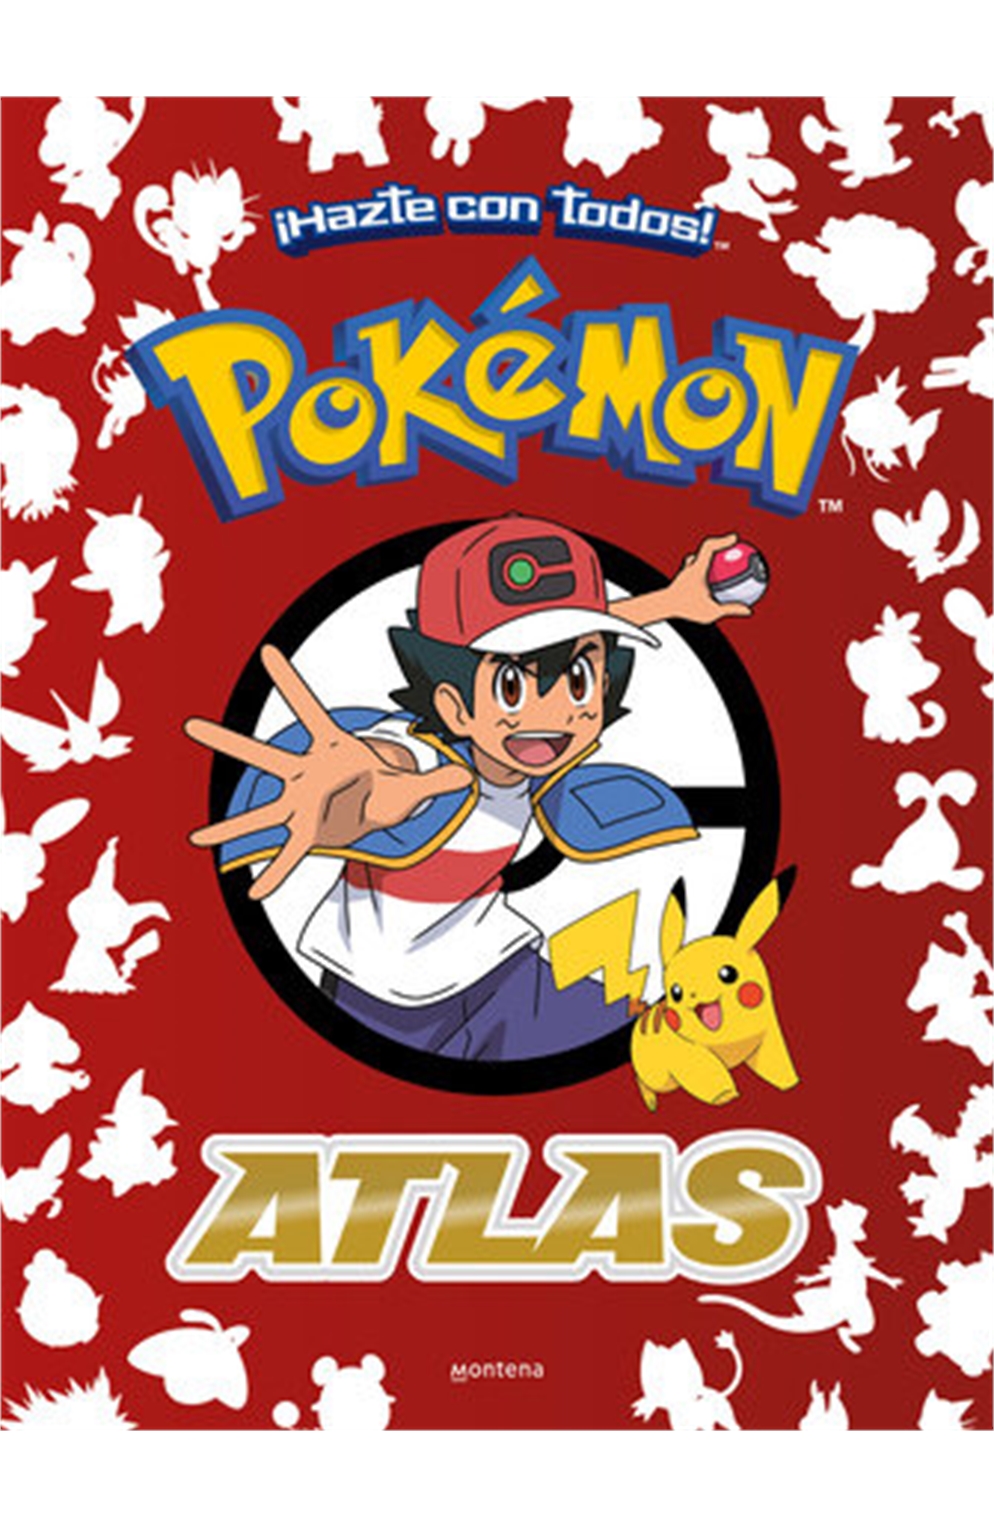 Atlas Pokémon / Pokémon Atlas